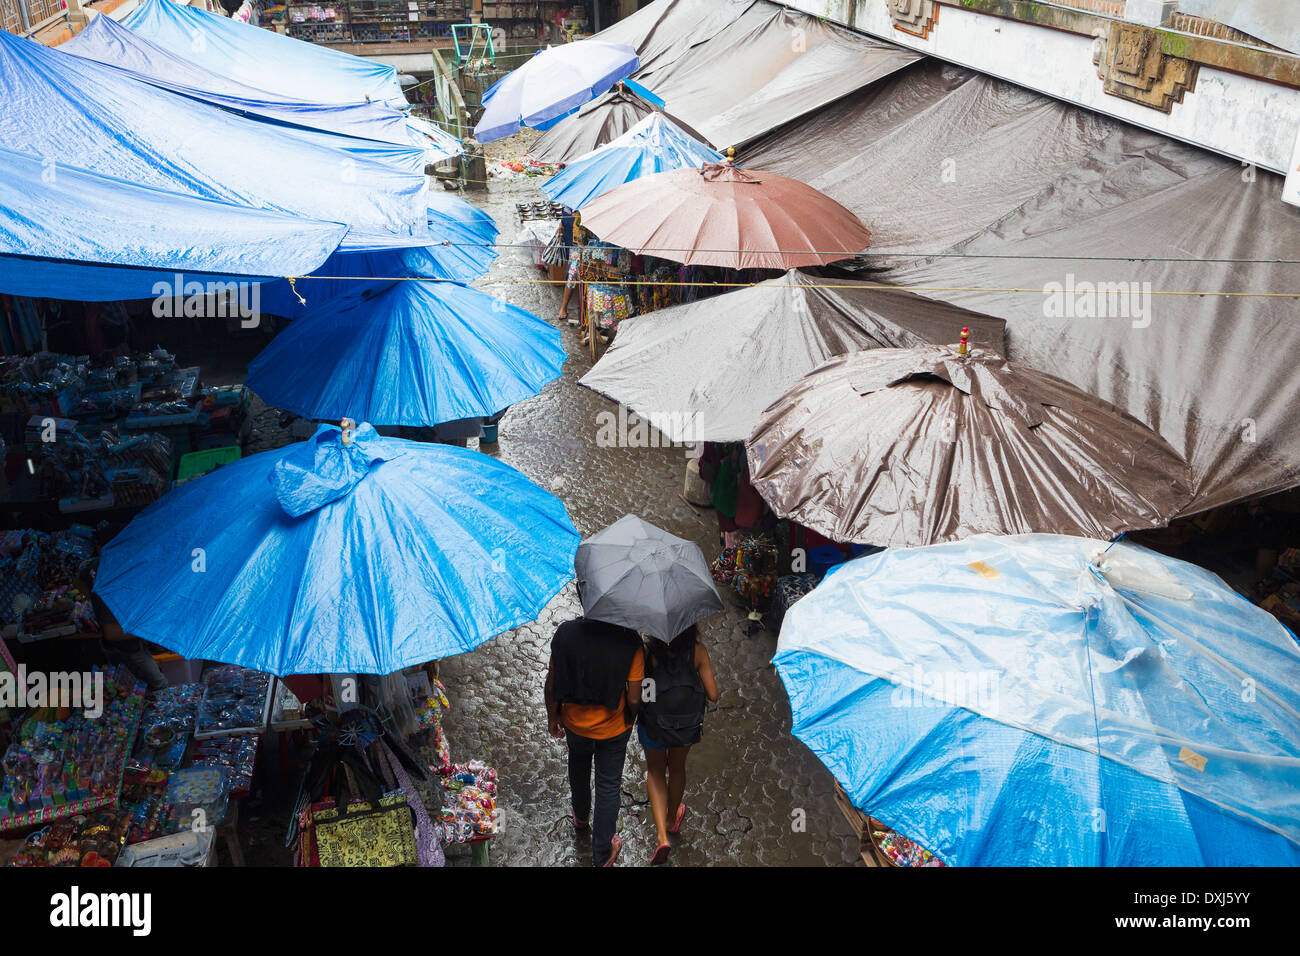 Rain falling over tarps and awnings of market stalls, Ubud, Bali, Indonesia Stock Photo